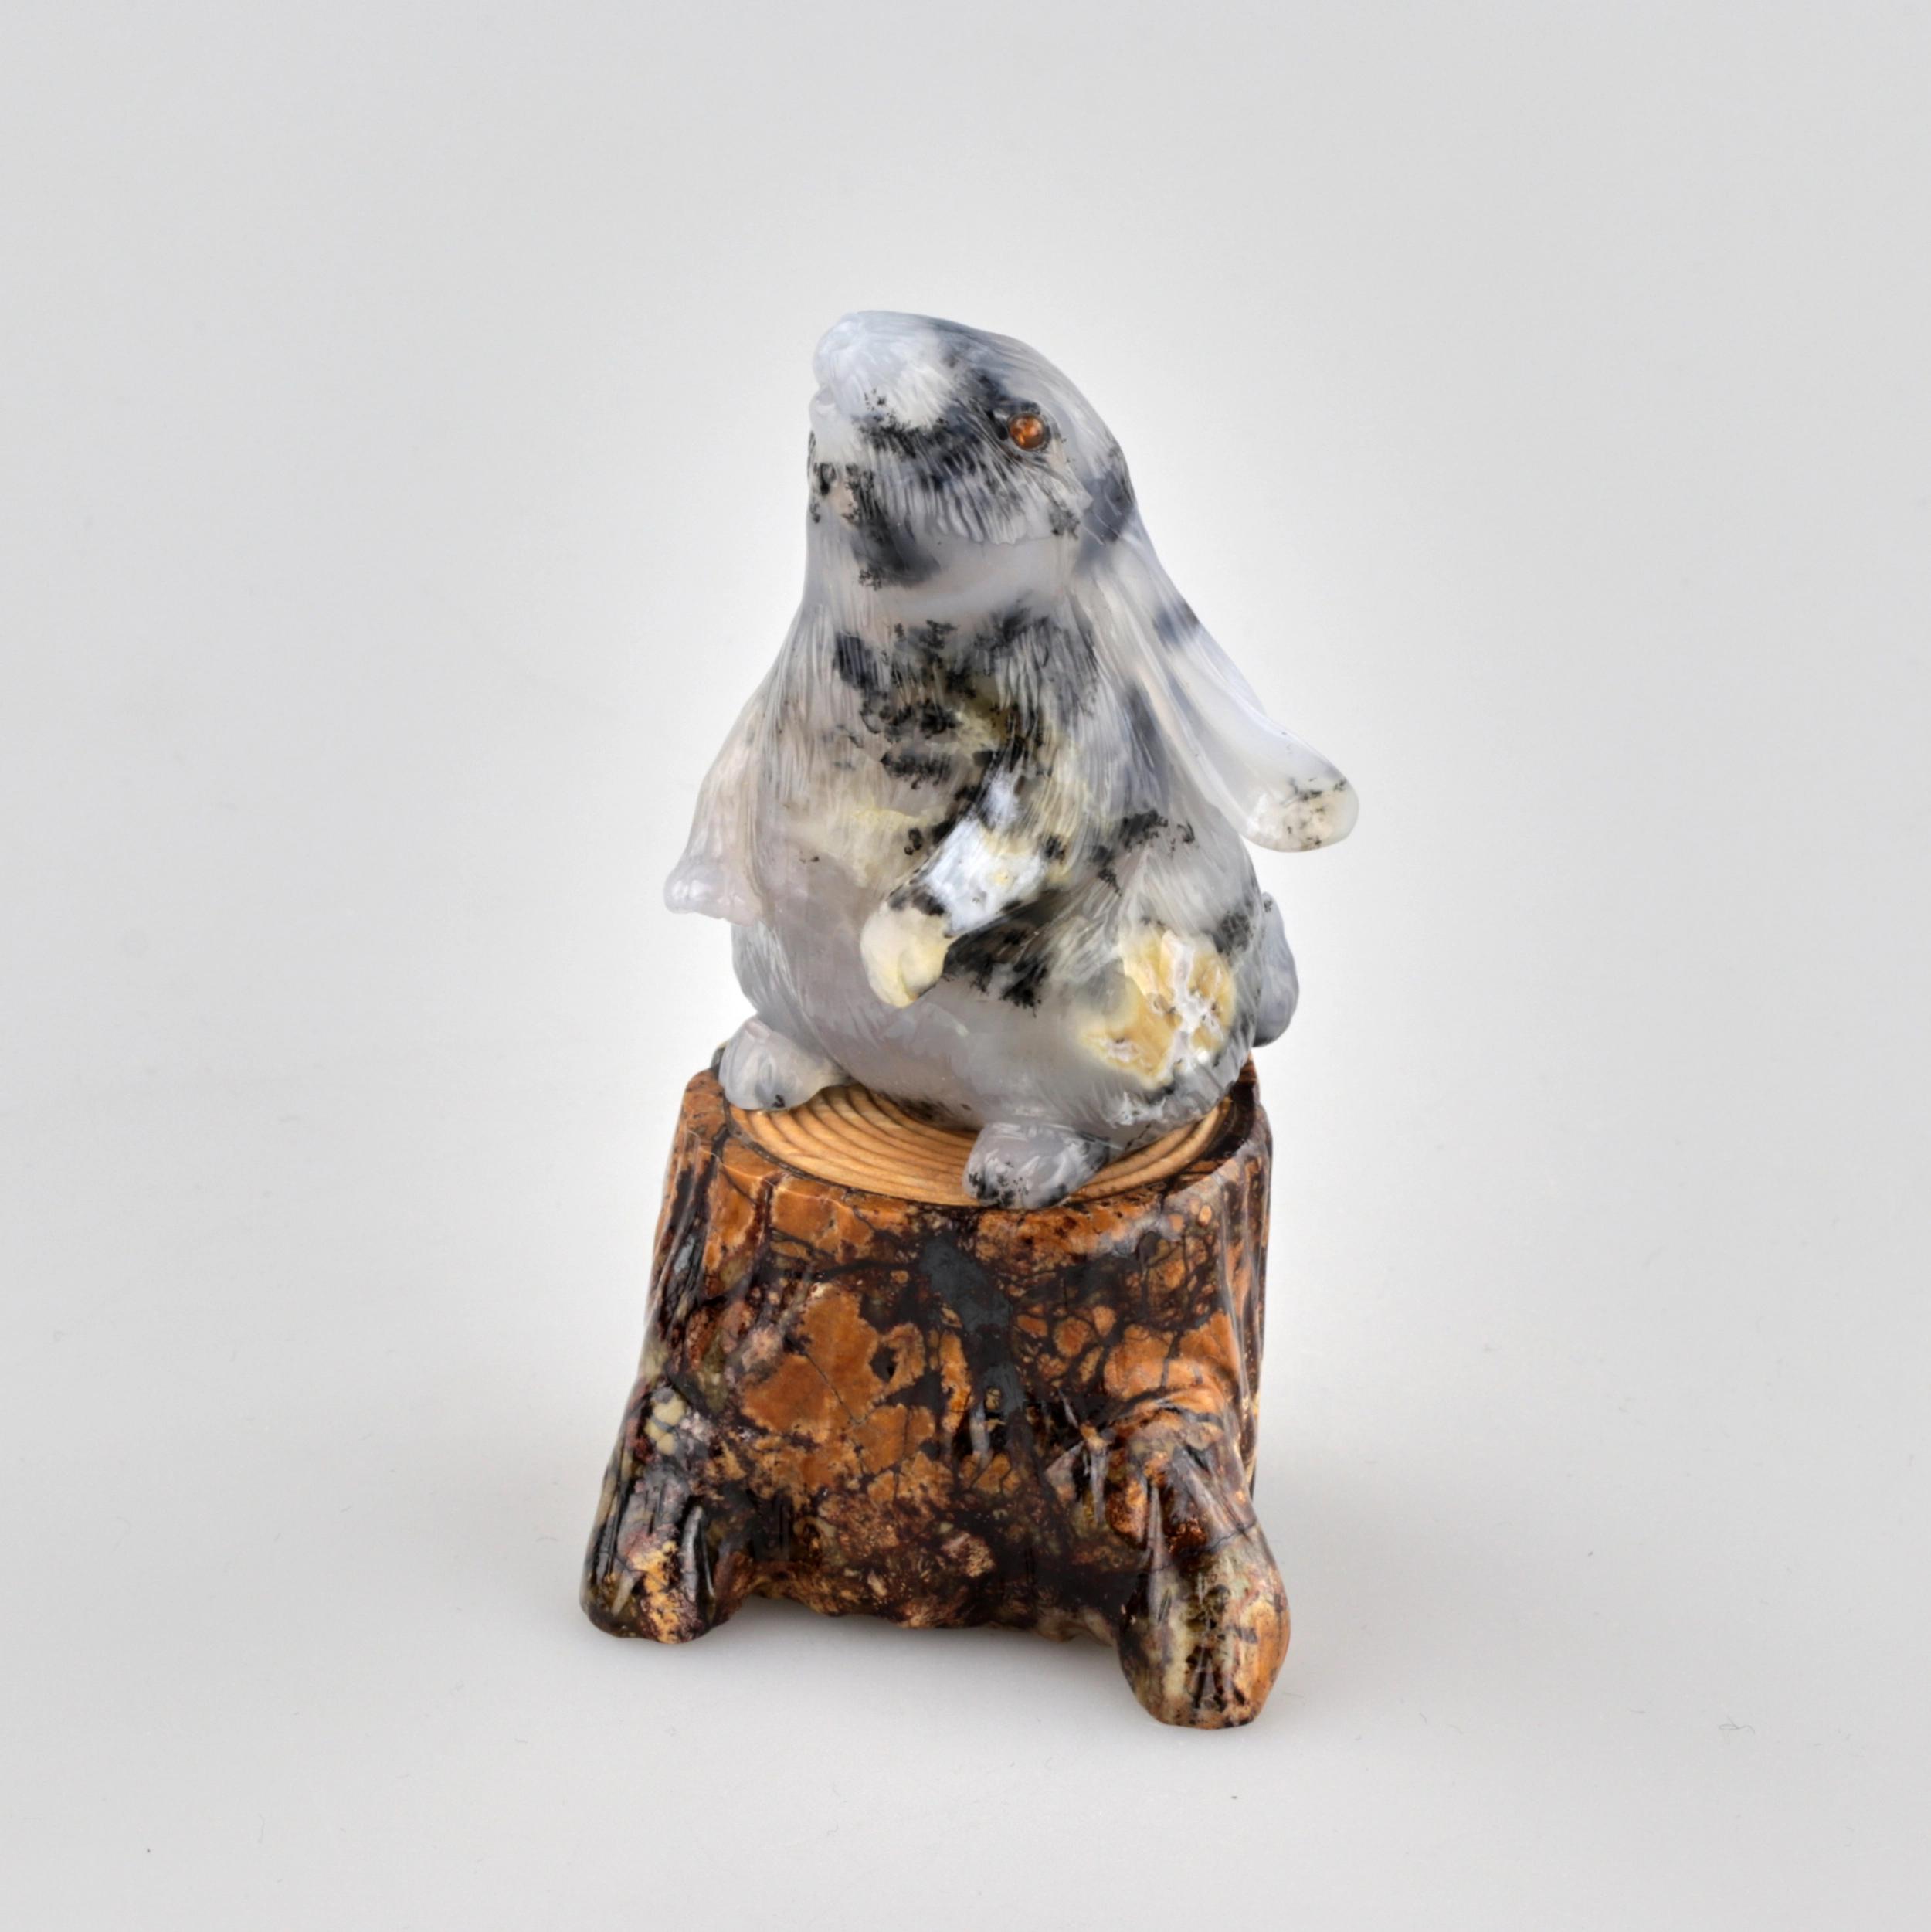 Figurine "Hare on a stump" - Image 2 of 6